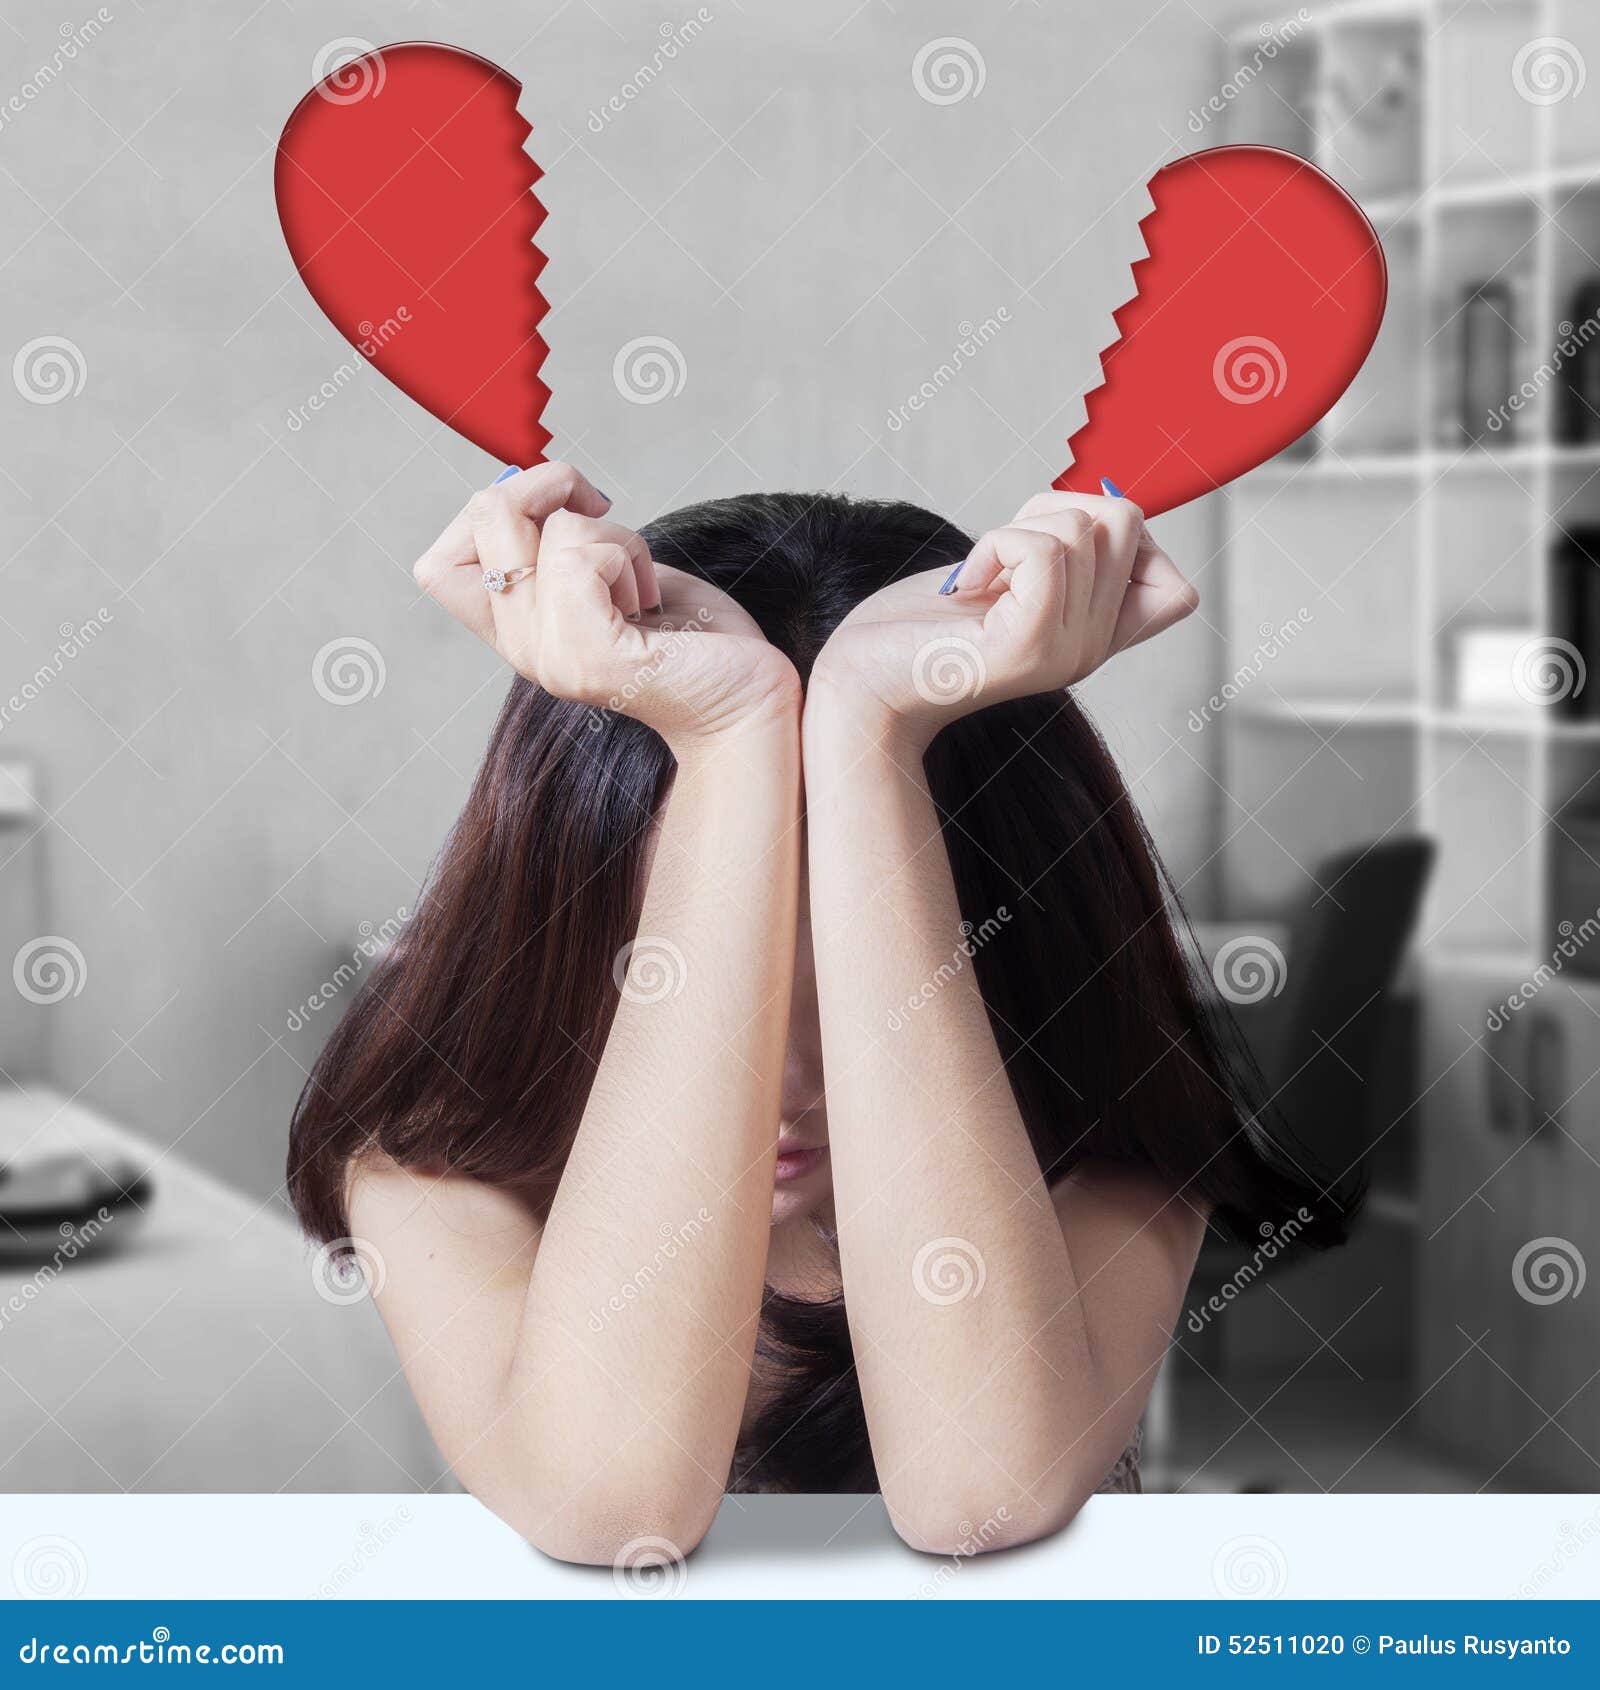 Broken Heart Girl in the Bedroom Stock Photo - Image of alone ...